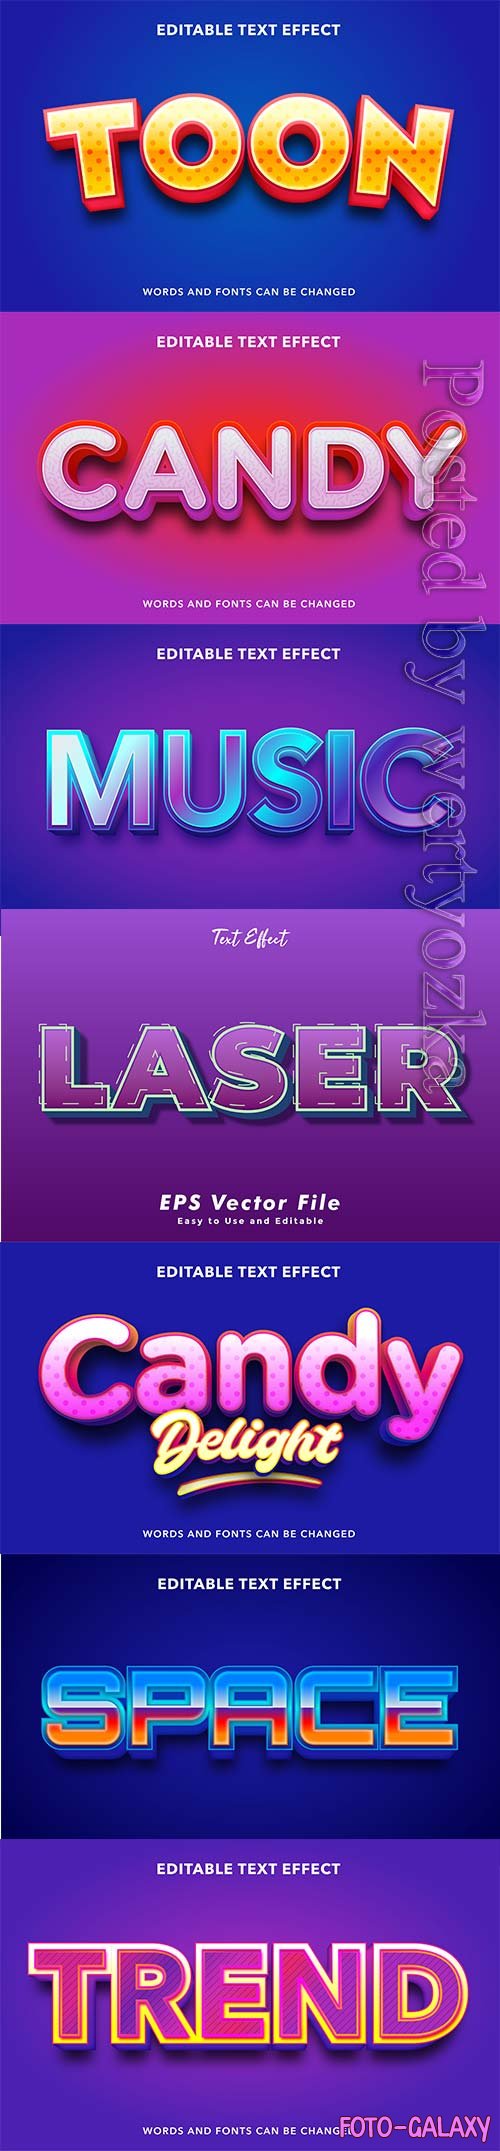 3d editable text style effect vector vol 249